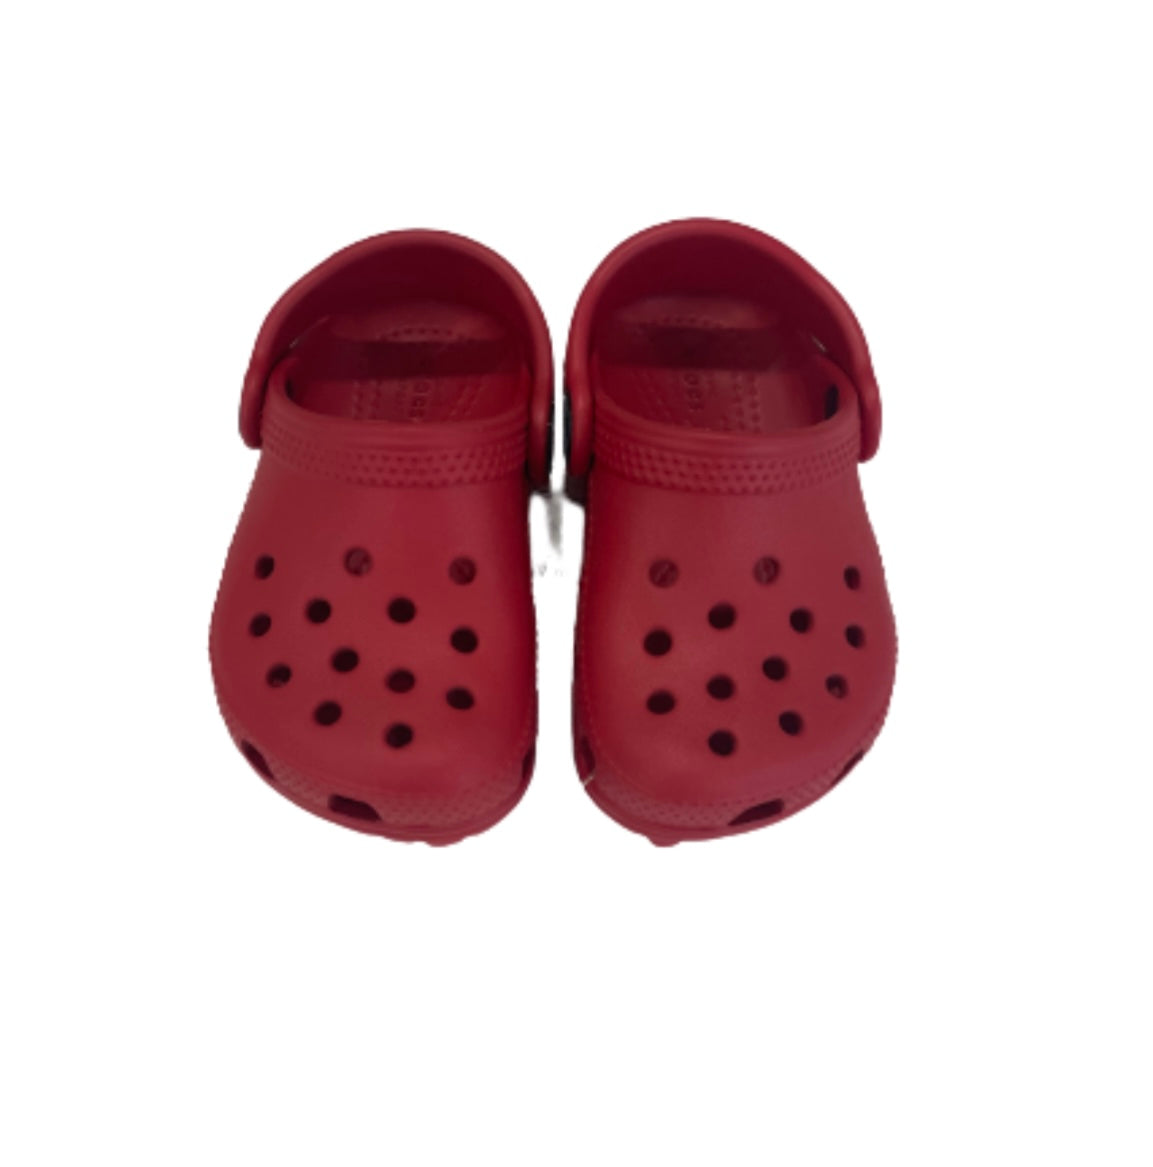 Red crocs